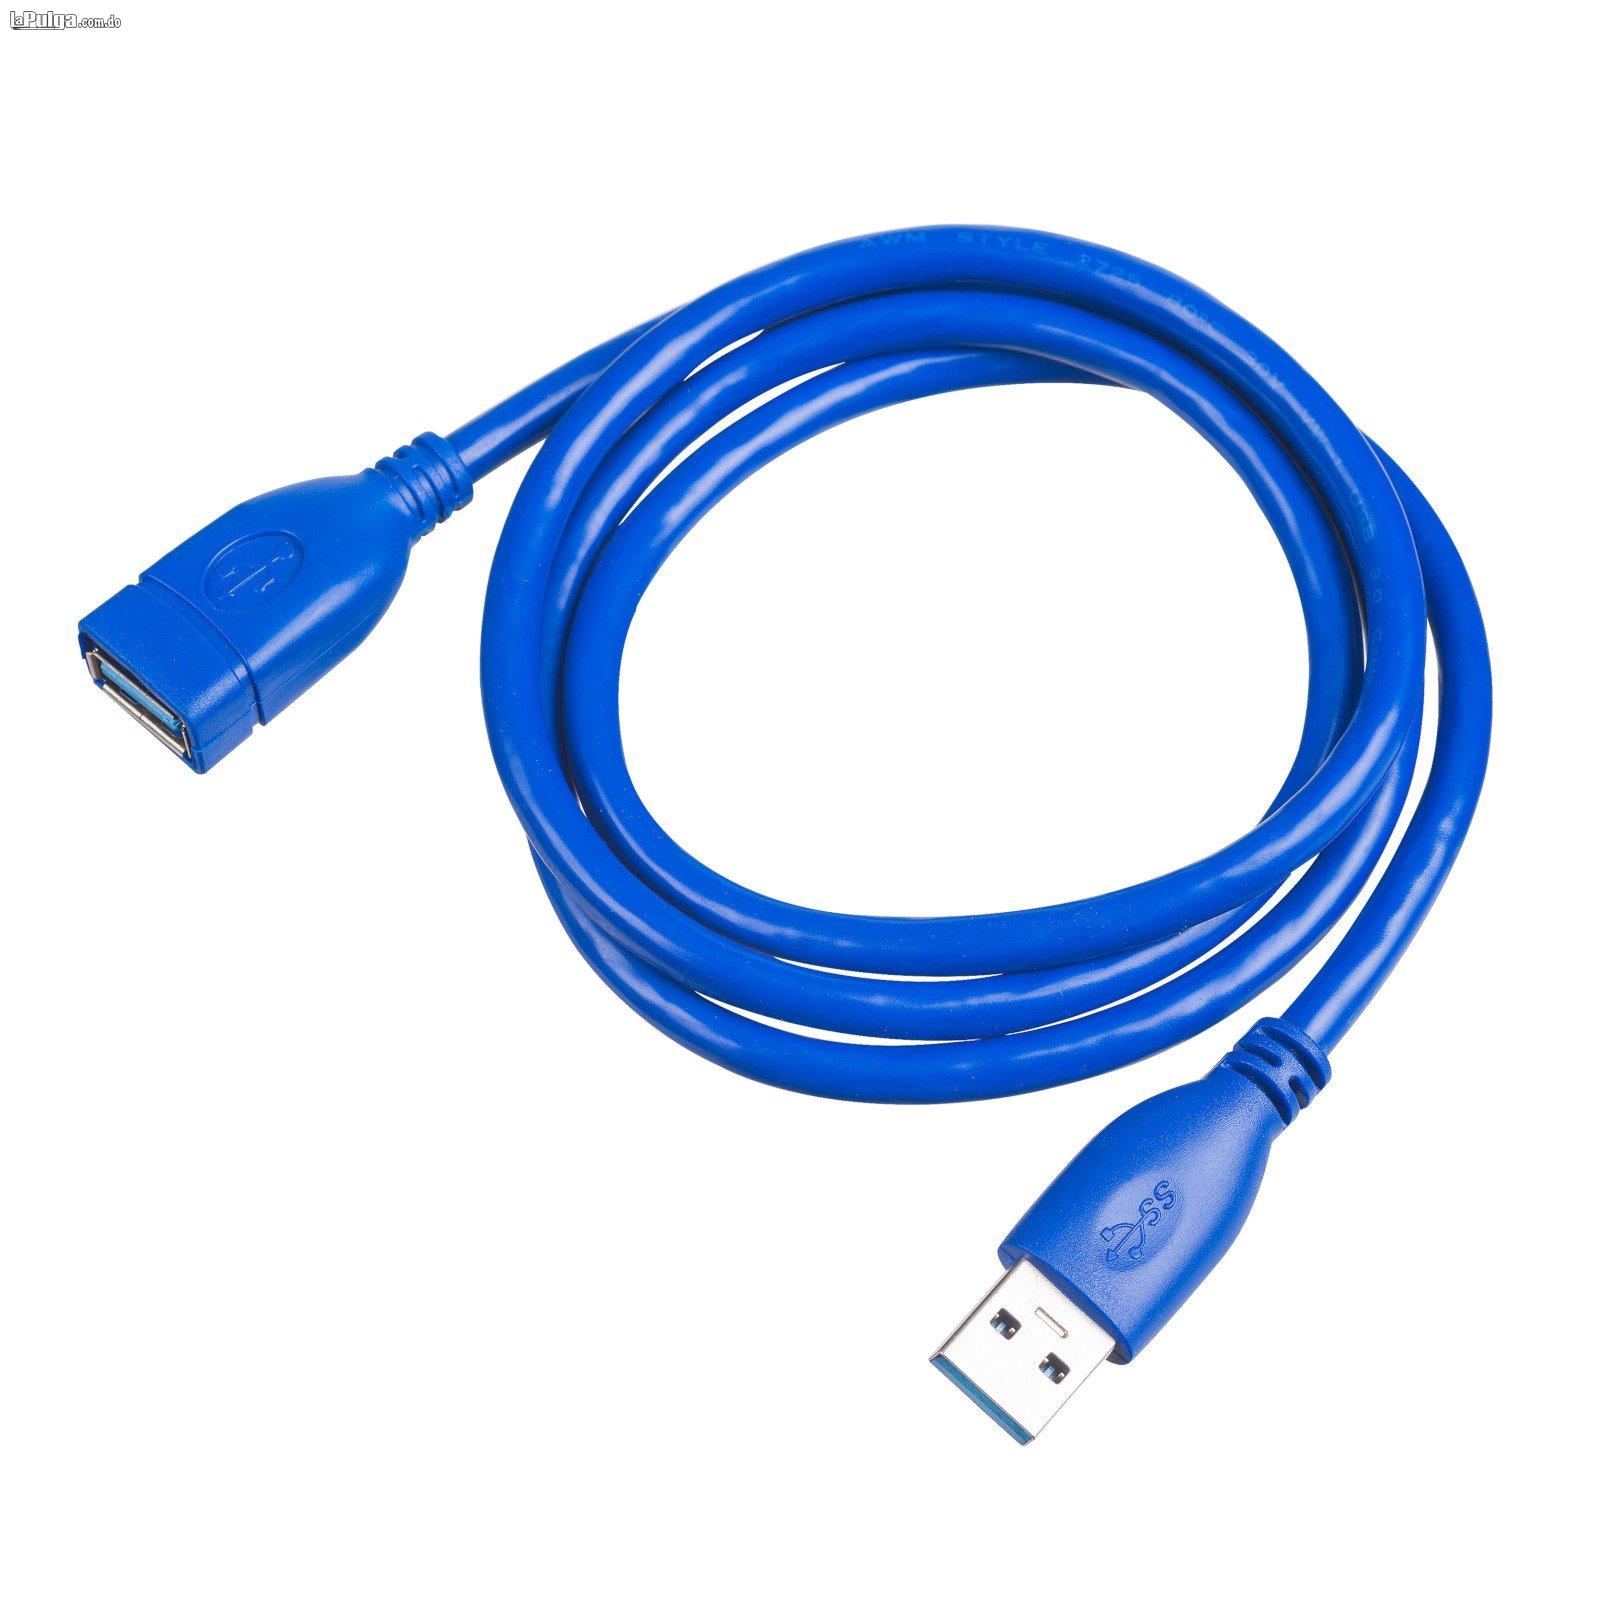 Cable de extensión USB 3.0 de macho a hembra de 1 metro Foto 7132483-1.jpg